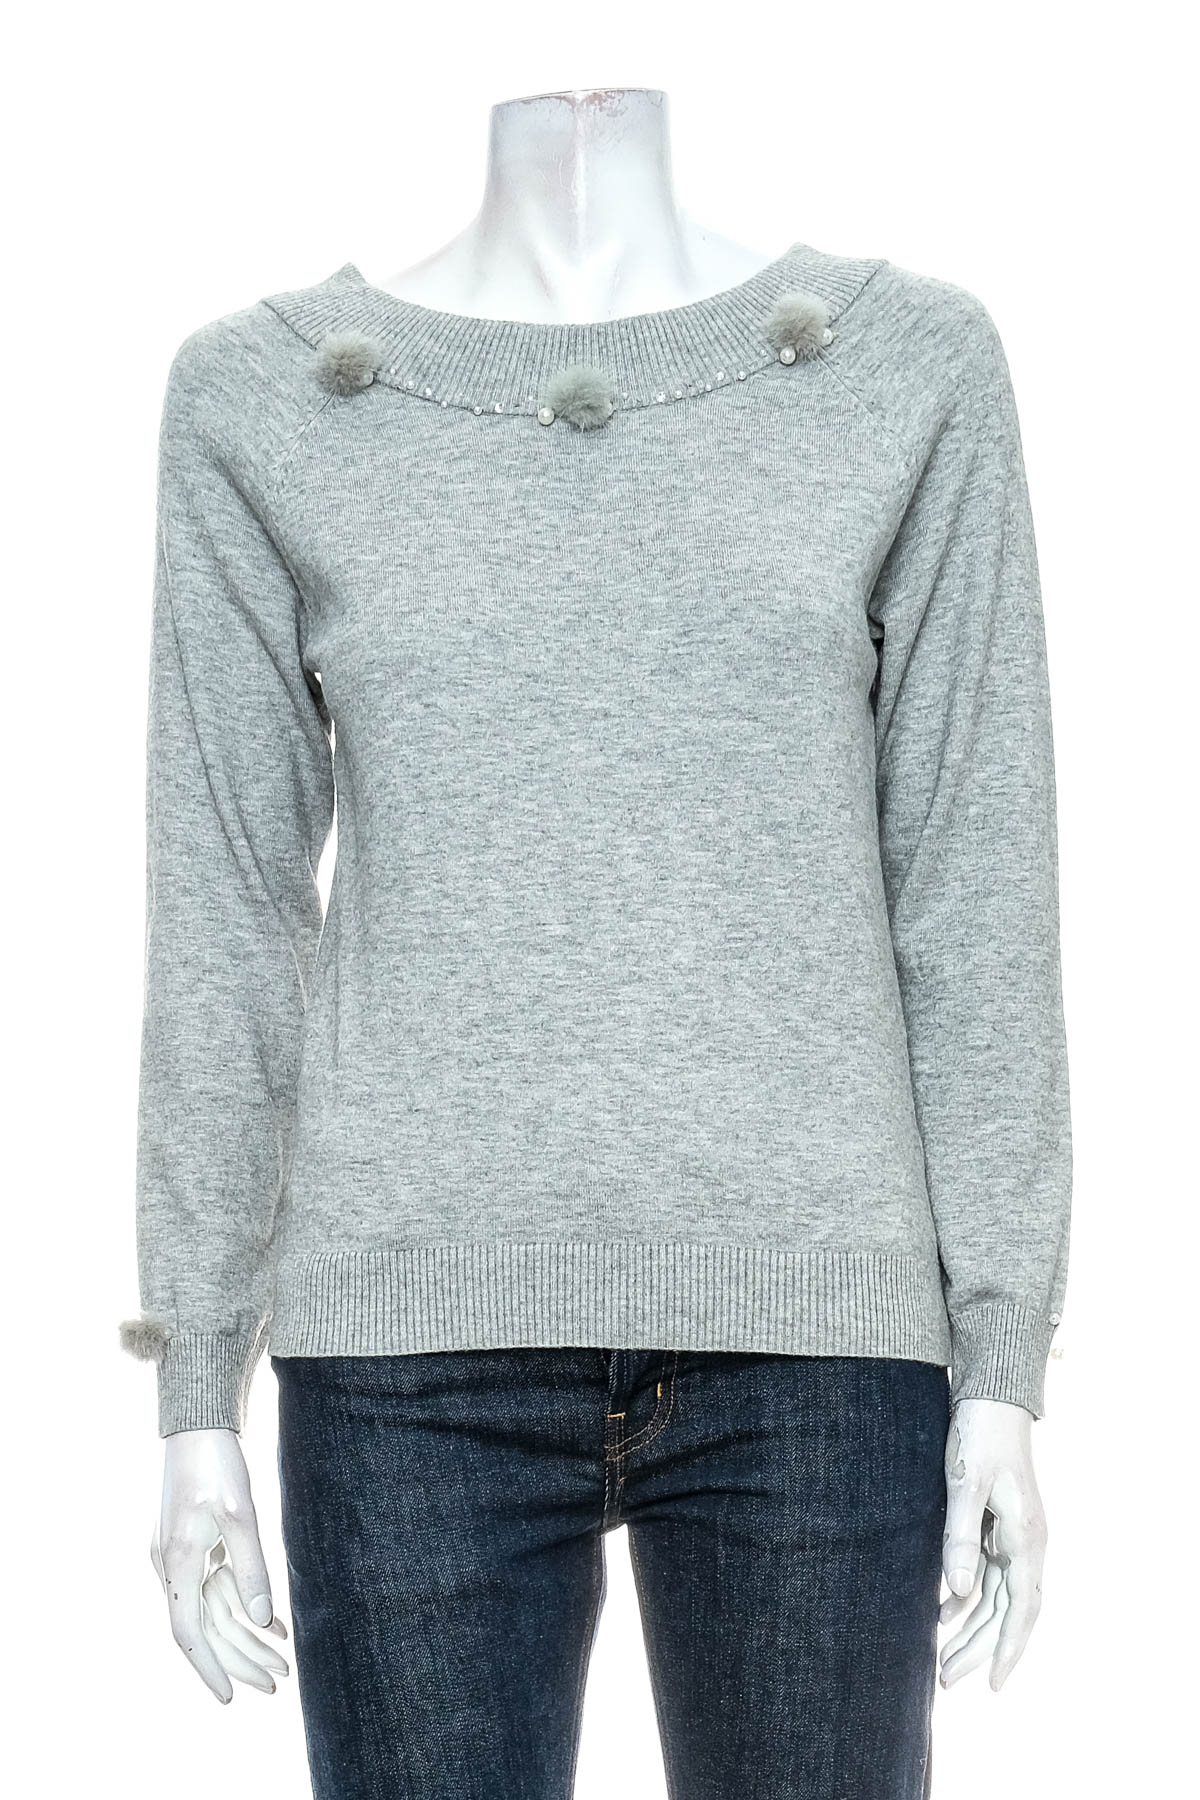 Women's sweater - 0918 - 0